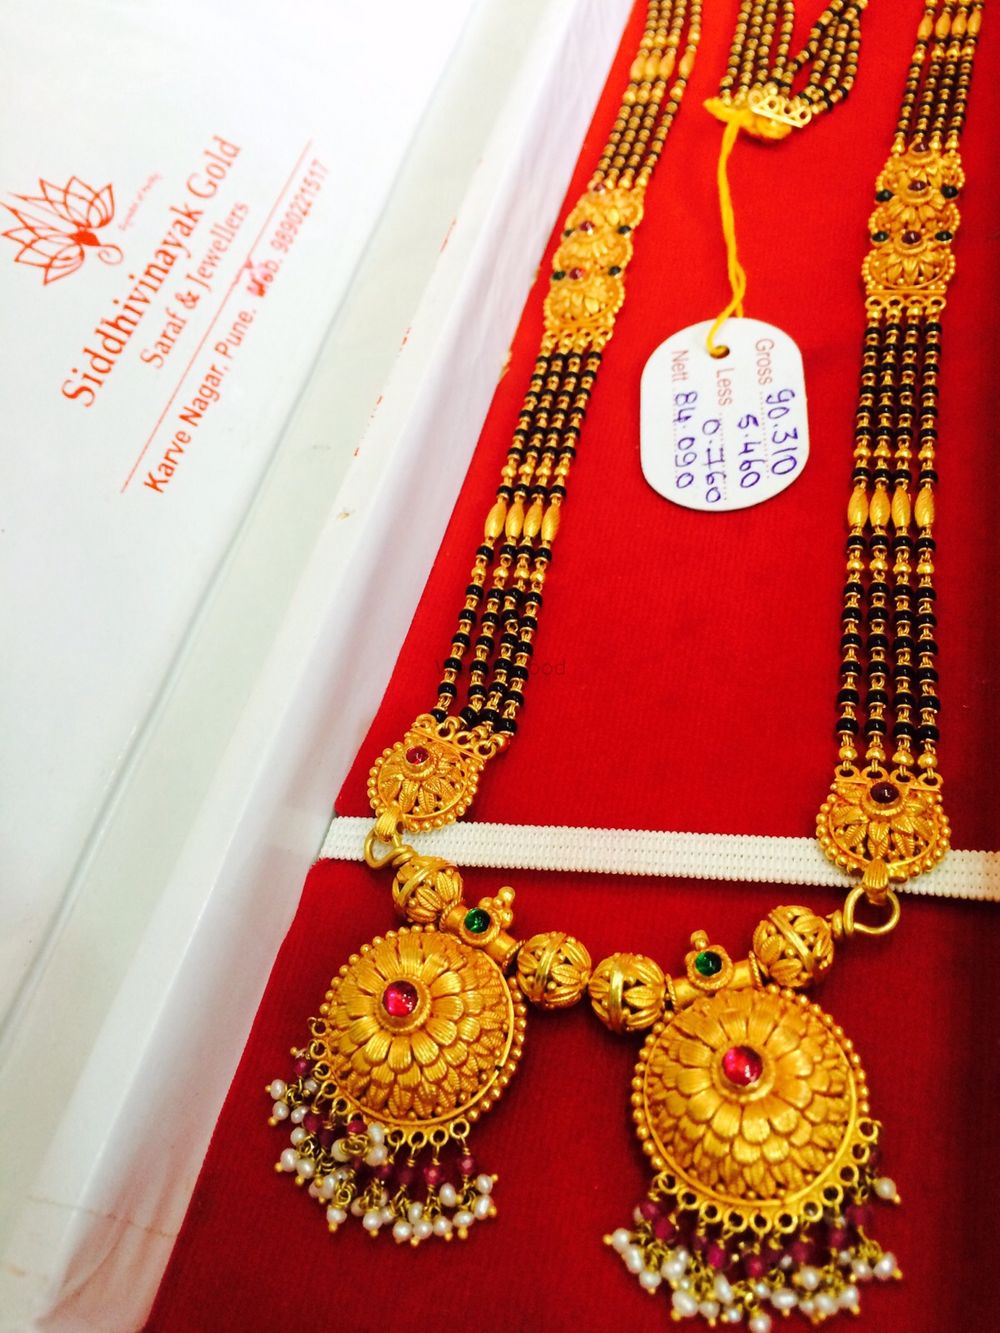 Photo By Siddhivinayak Gold  - Jewellery